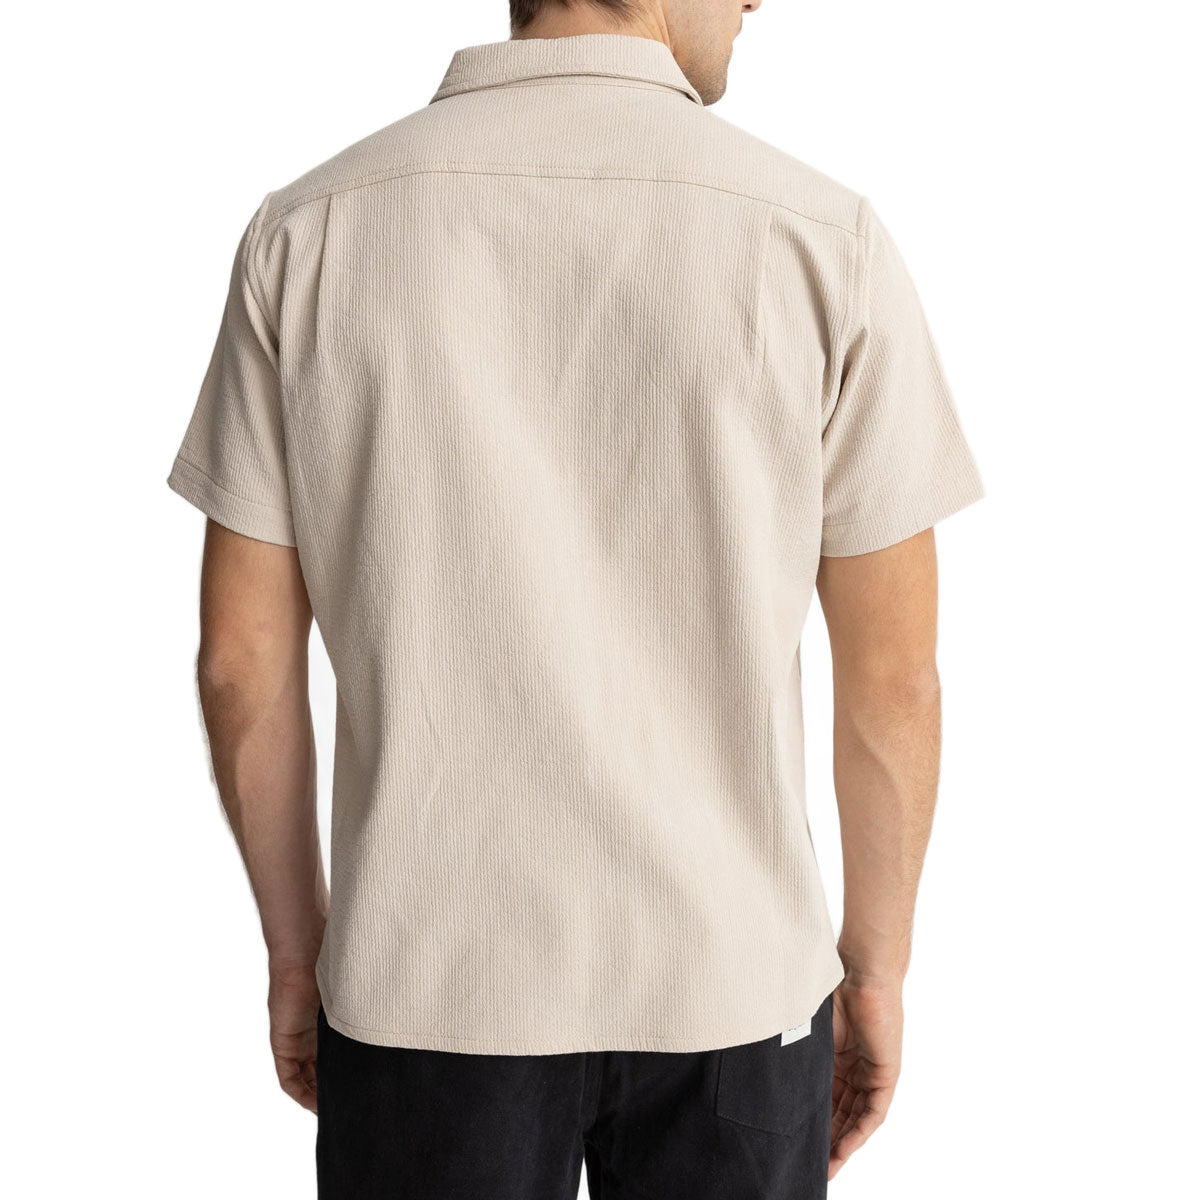 Rhythm Textured Quarter Zip Shirt - Sand image 2